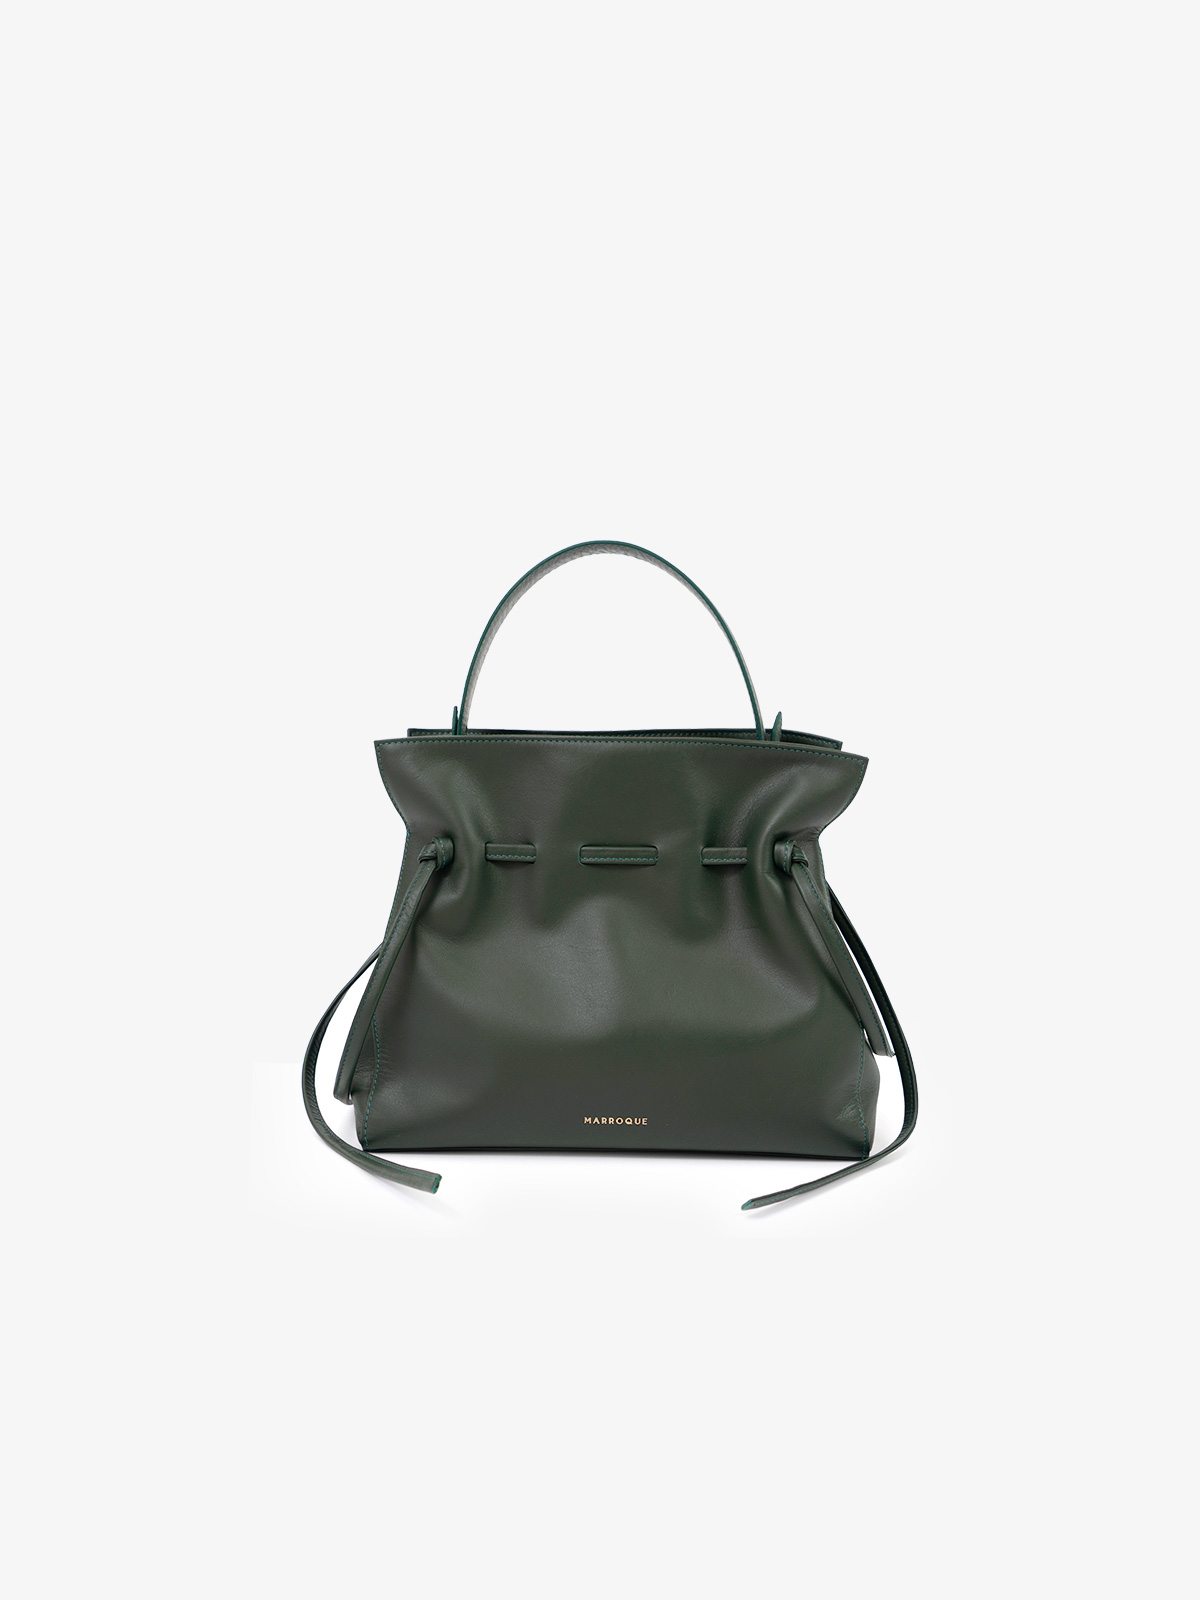 marroque Wendy in Darkforest Leather Crossbody bag